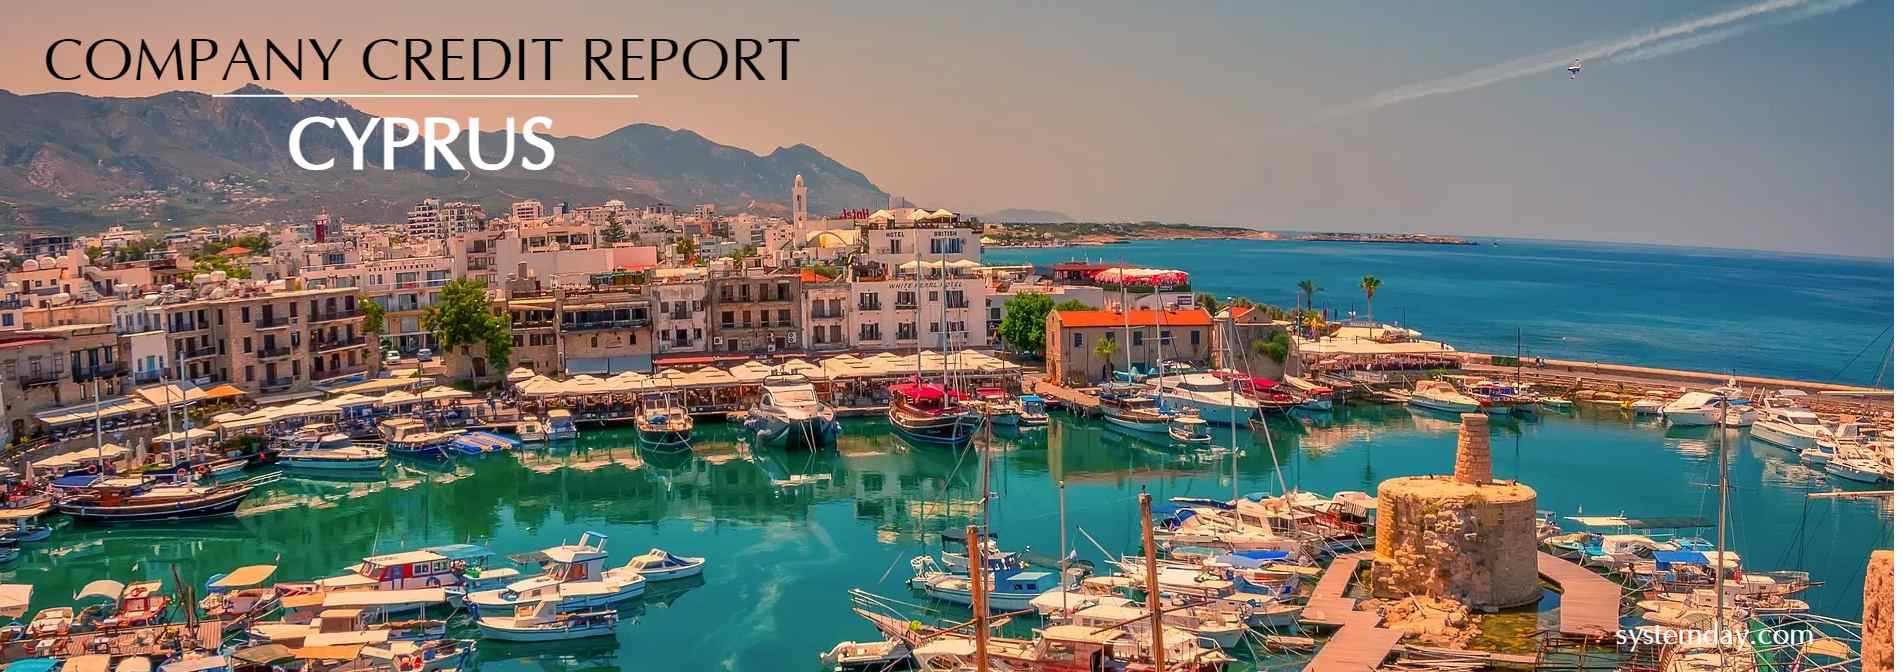 Cyprus Company Credit Report